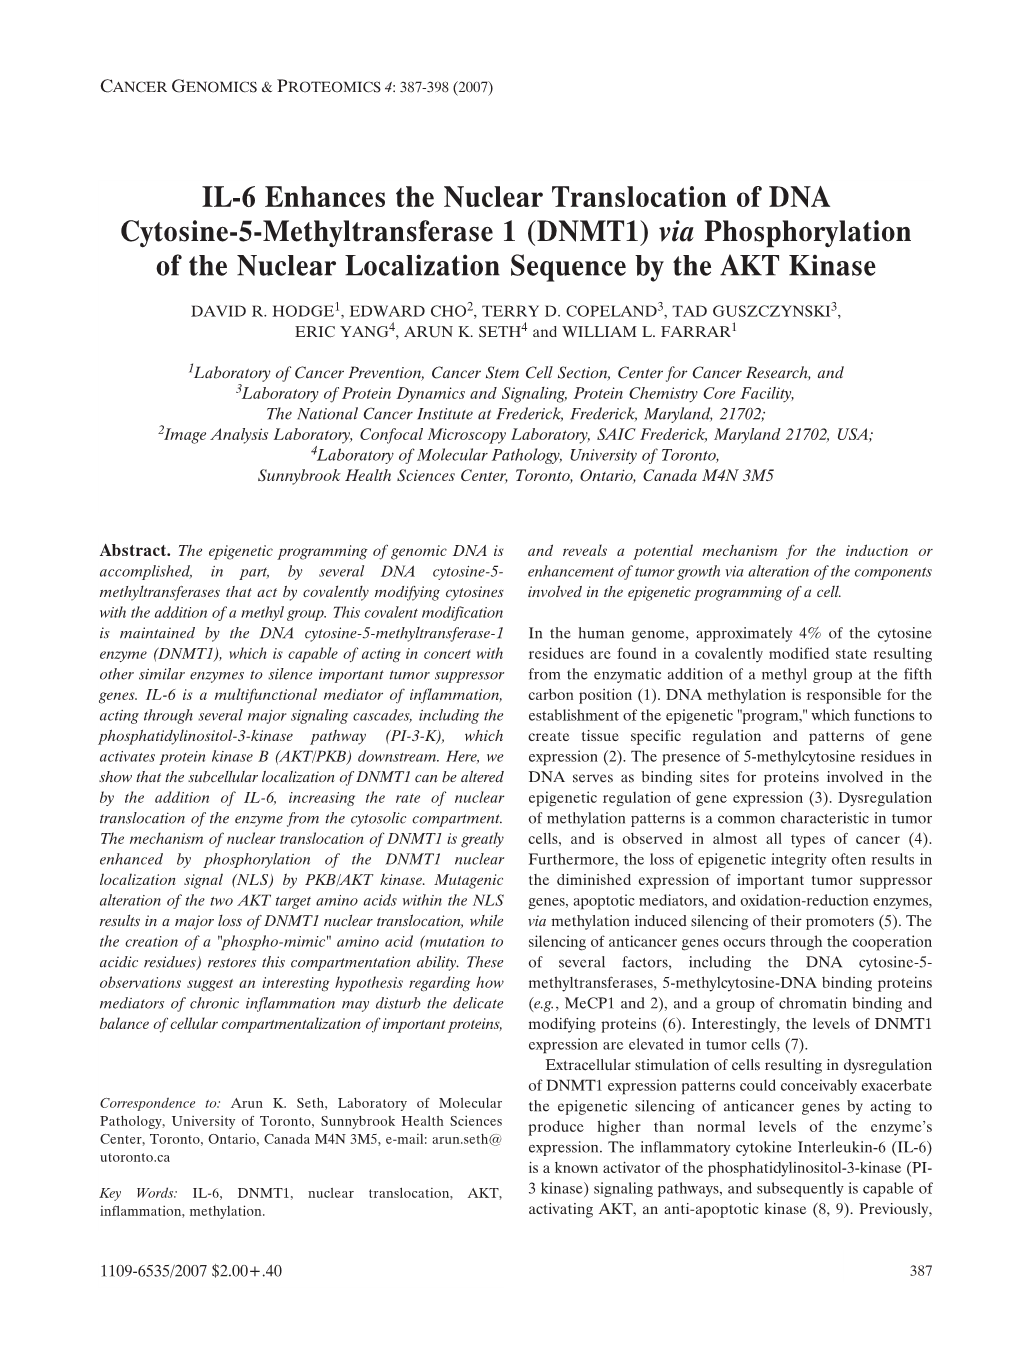 IL-6 Enhances the Nuclear Translocation of DNA Cytosine-5-Methyltransferase 1 (DNMT1) Via Phosphorylation of the Nuclear Localization Sequence by the AKT Kinase